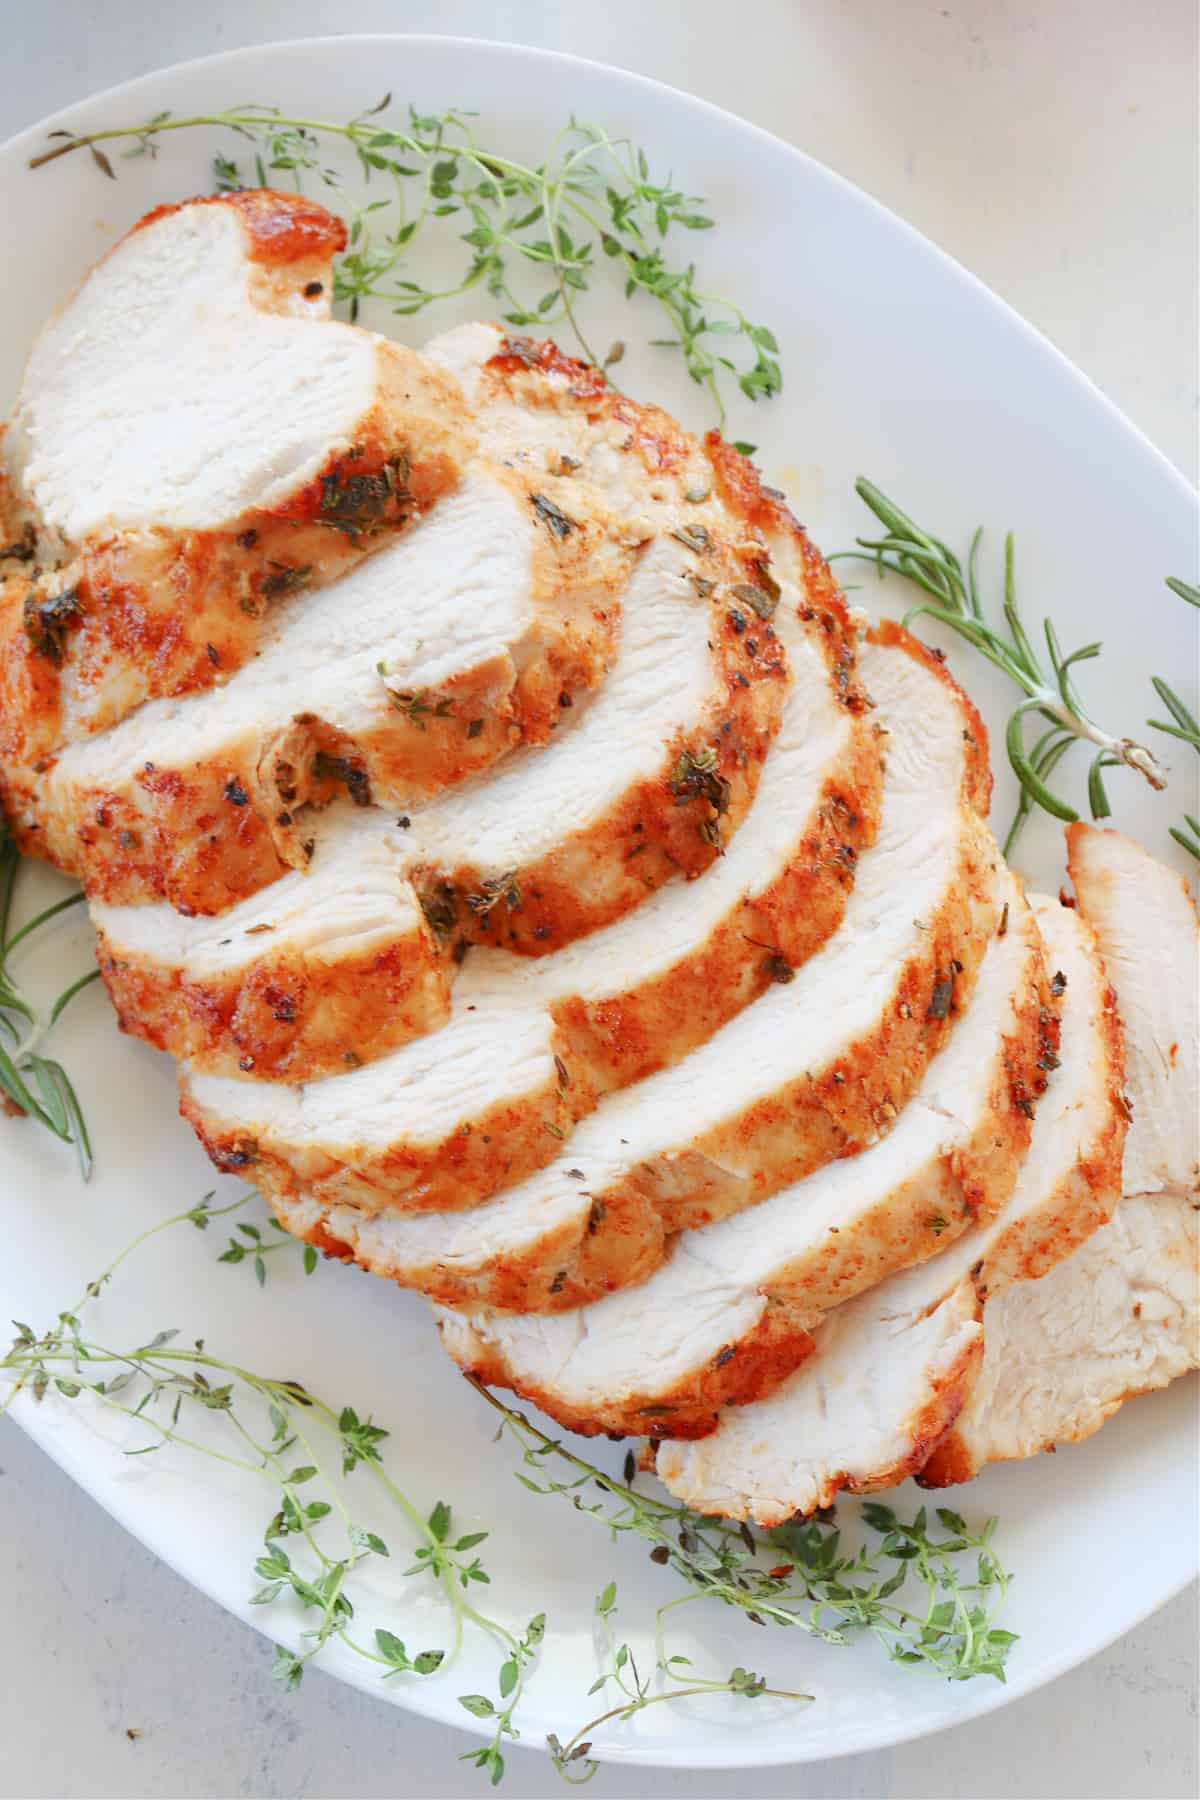 Sliced turkey breast on a plate.